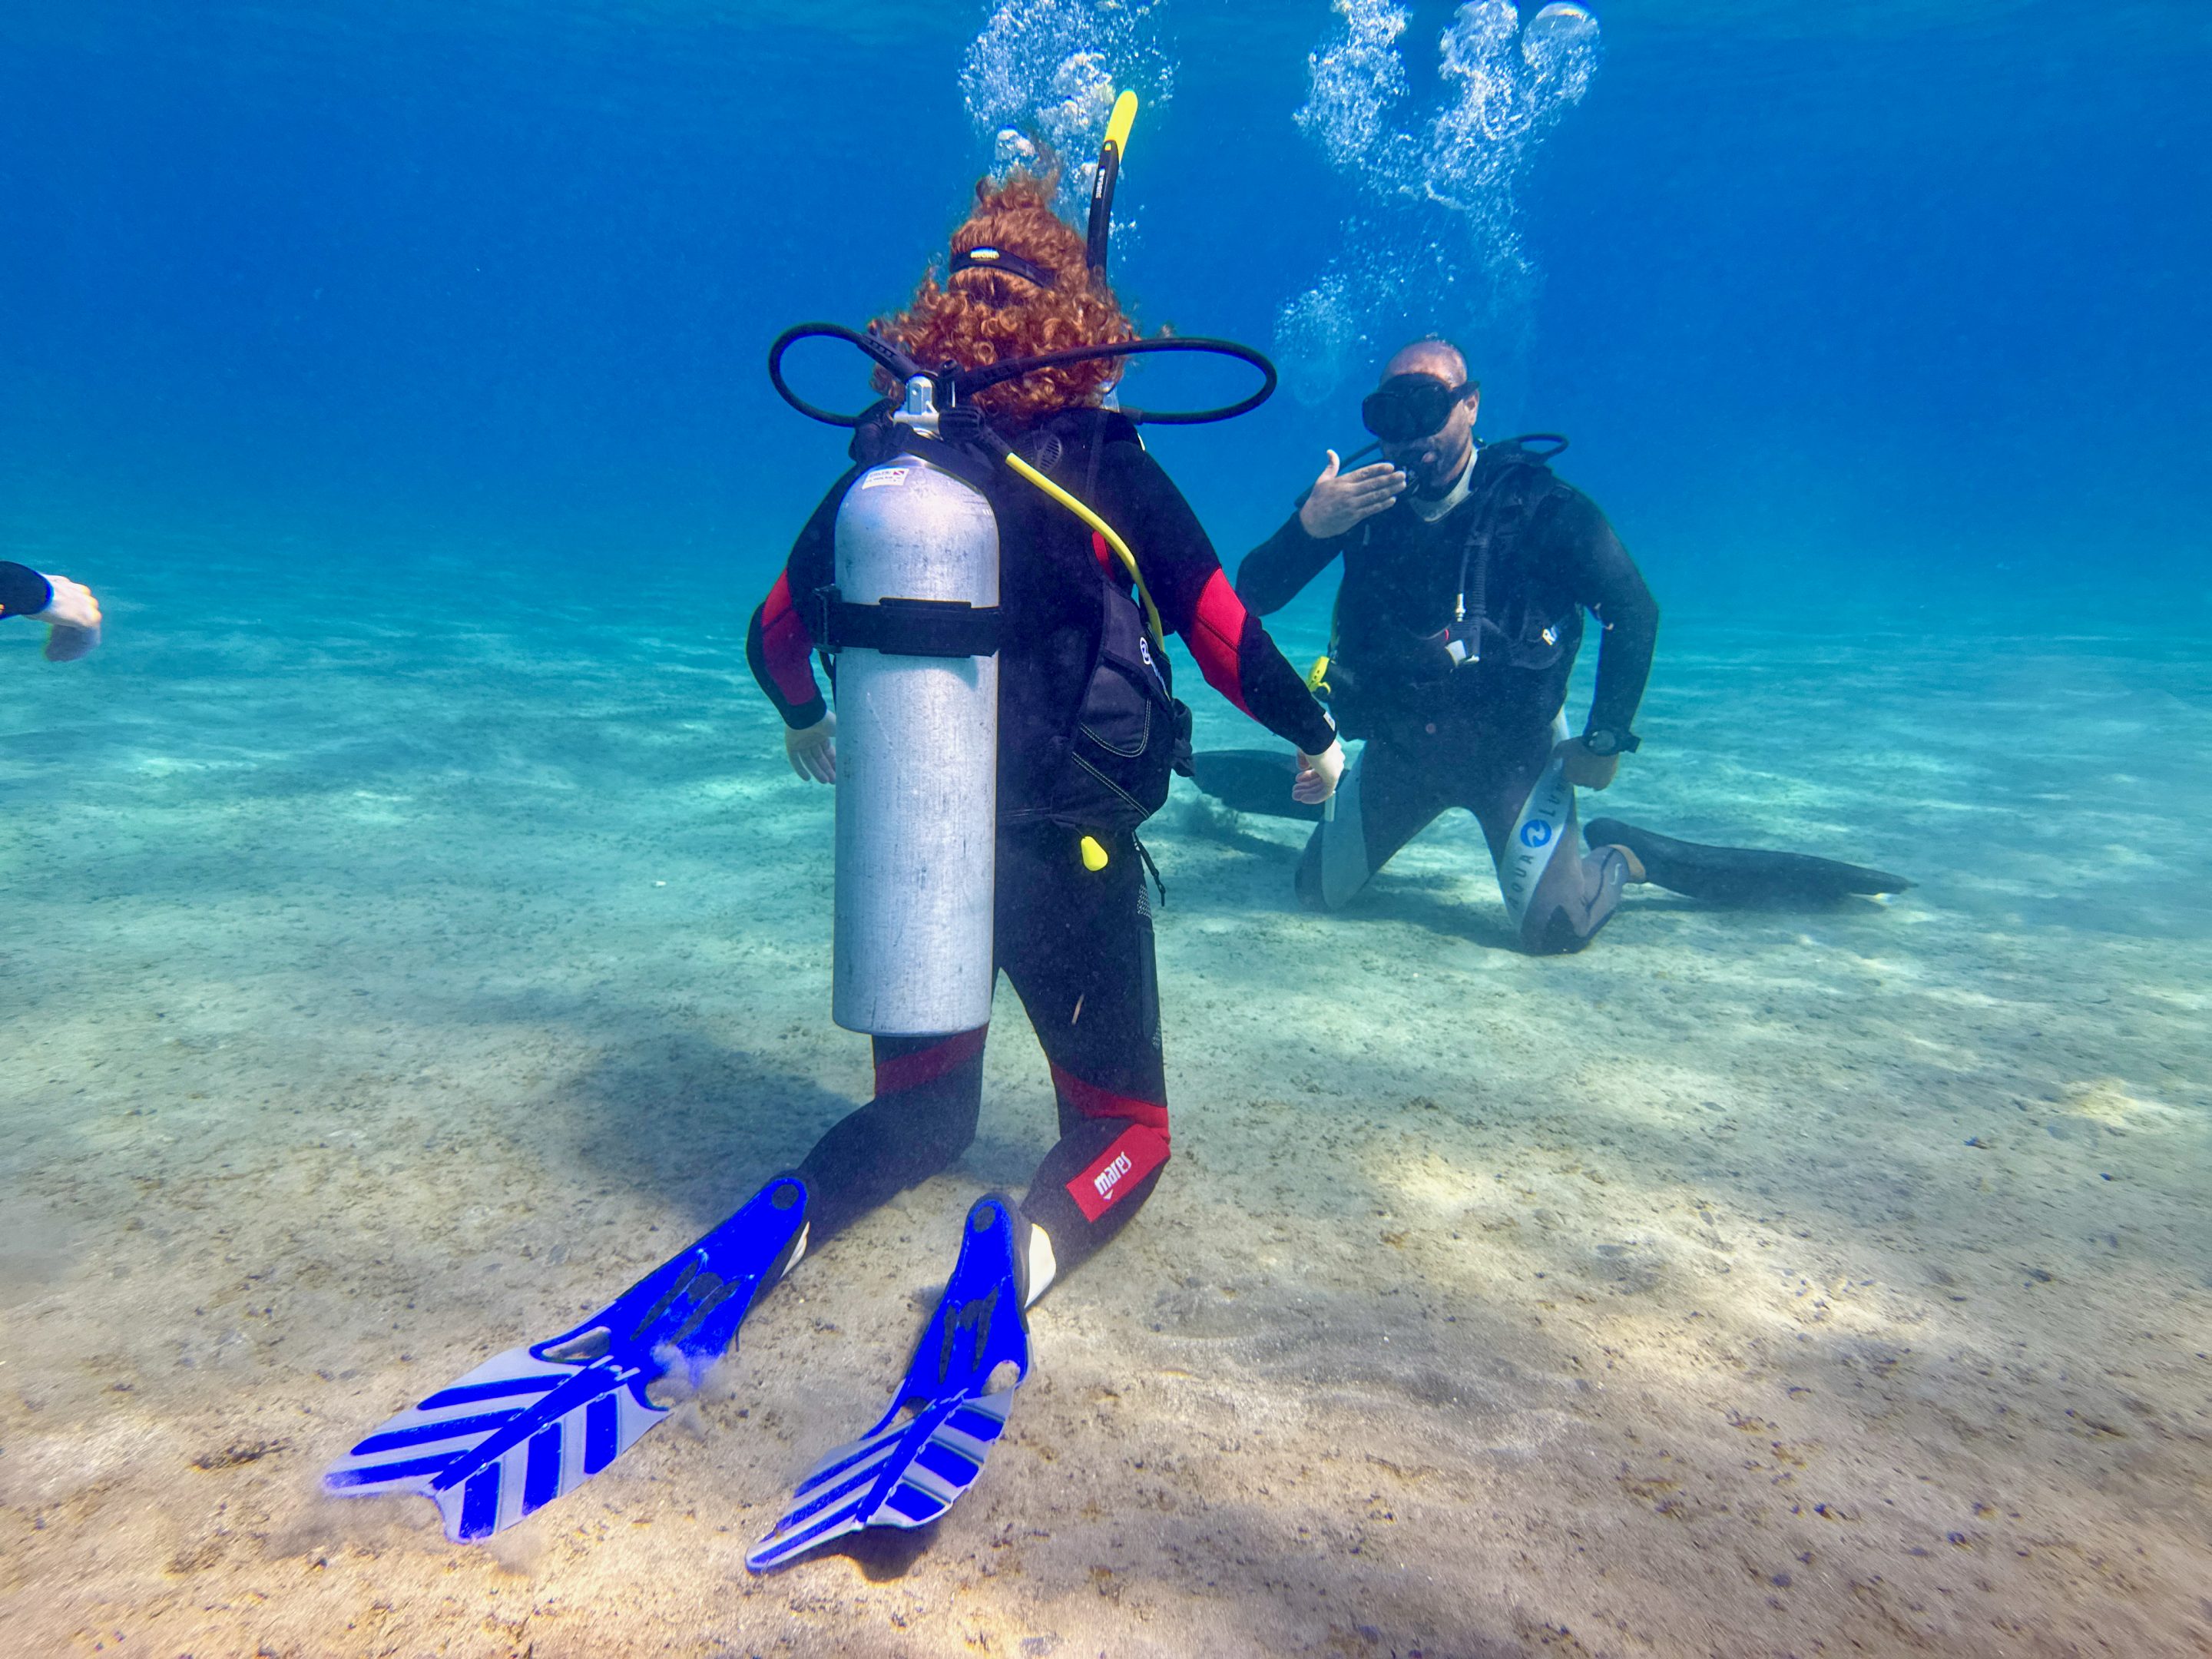 Das Dive Center bietet auch Tauchausbildung an. Foto: Sascha Tegtmeyer Tauchen Abu Dabbab Blue Ocean Dive Center Erfahrungen